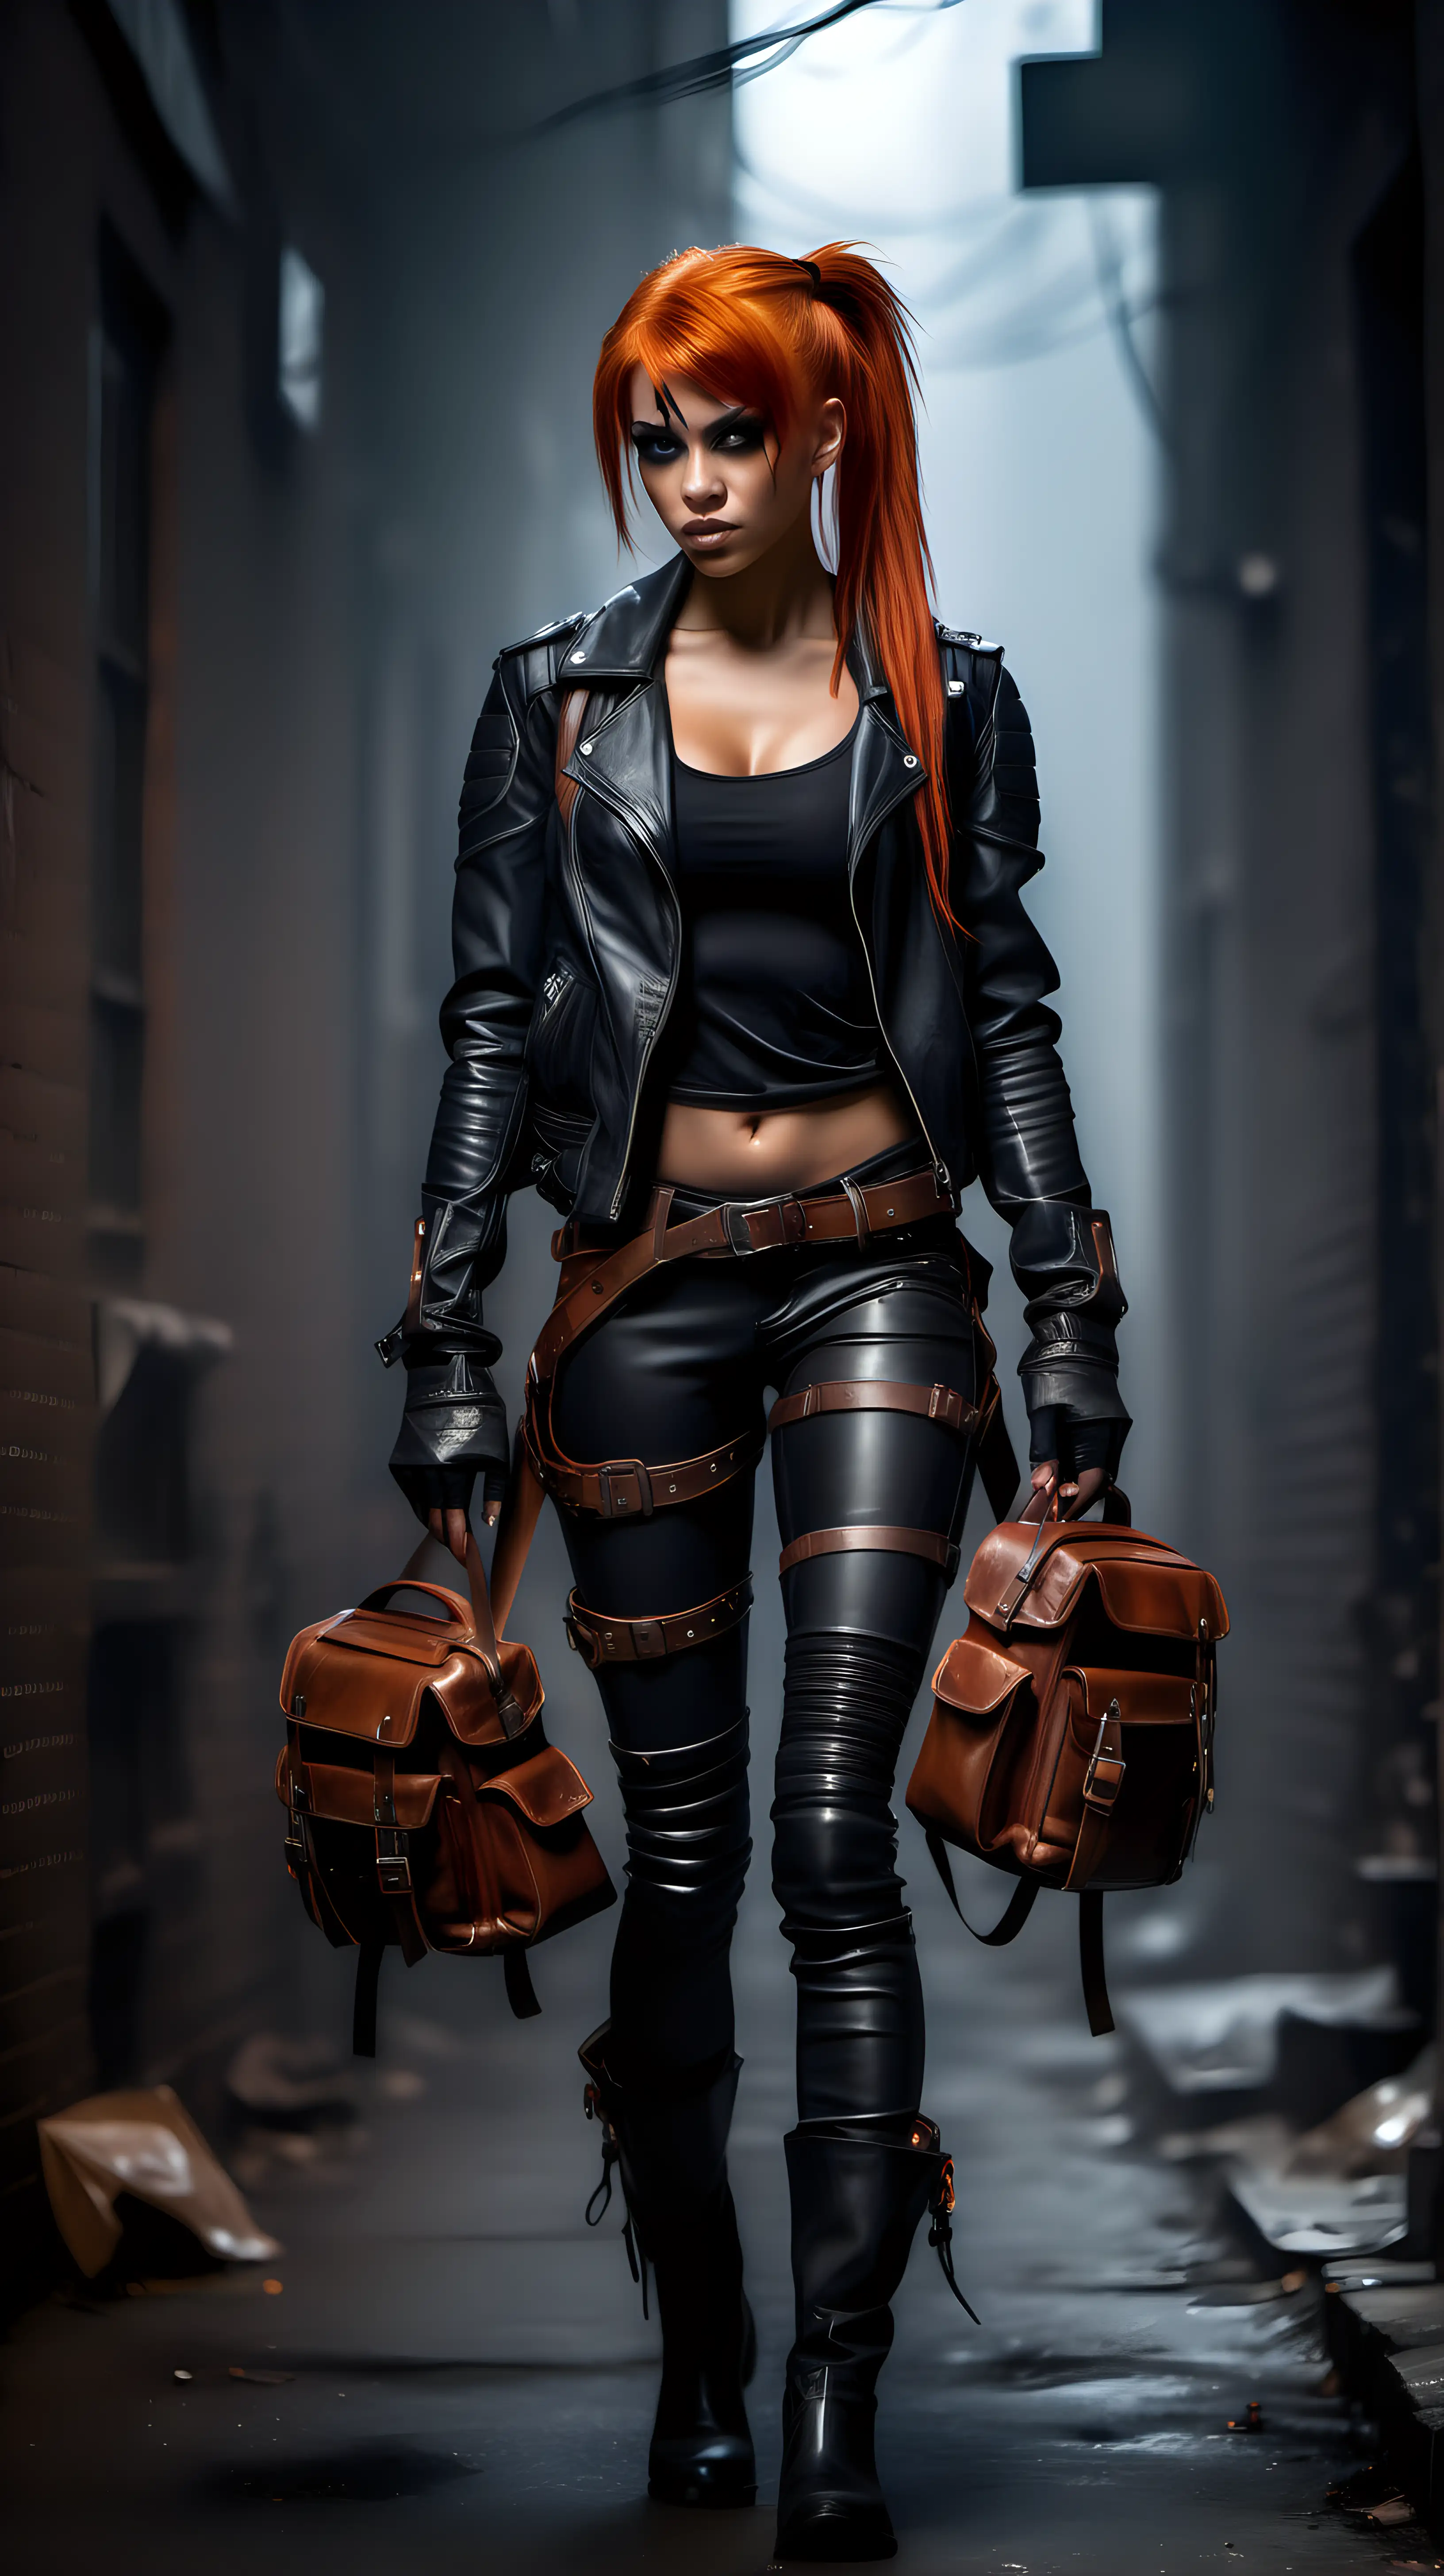 Fantasy Rogue with Orange Hair in Dark Alley